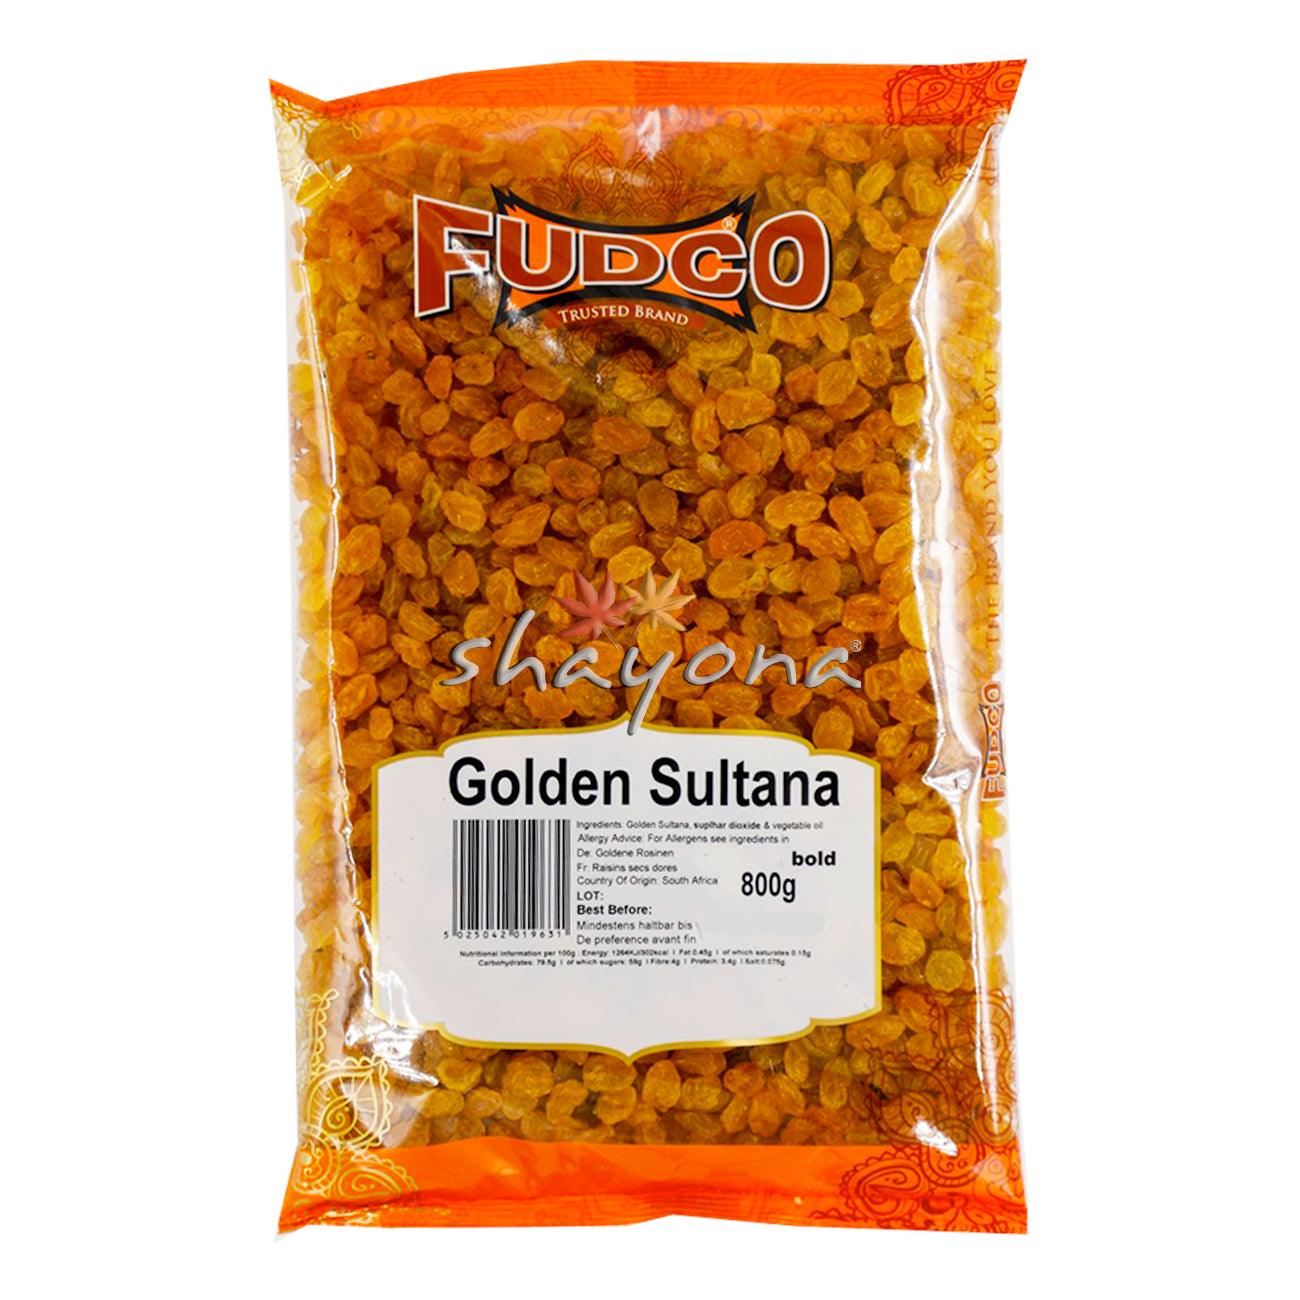 Fudco Golden Sultana - Shayona UK